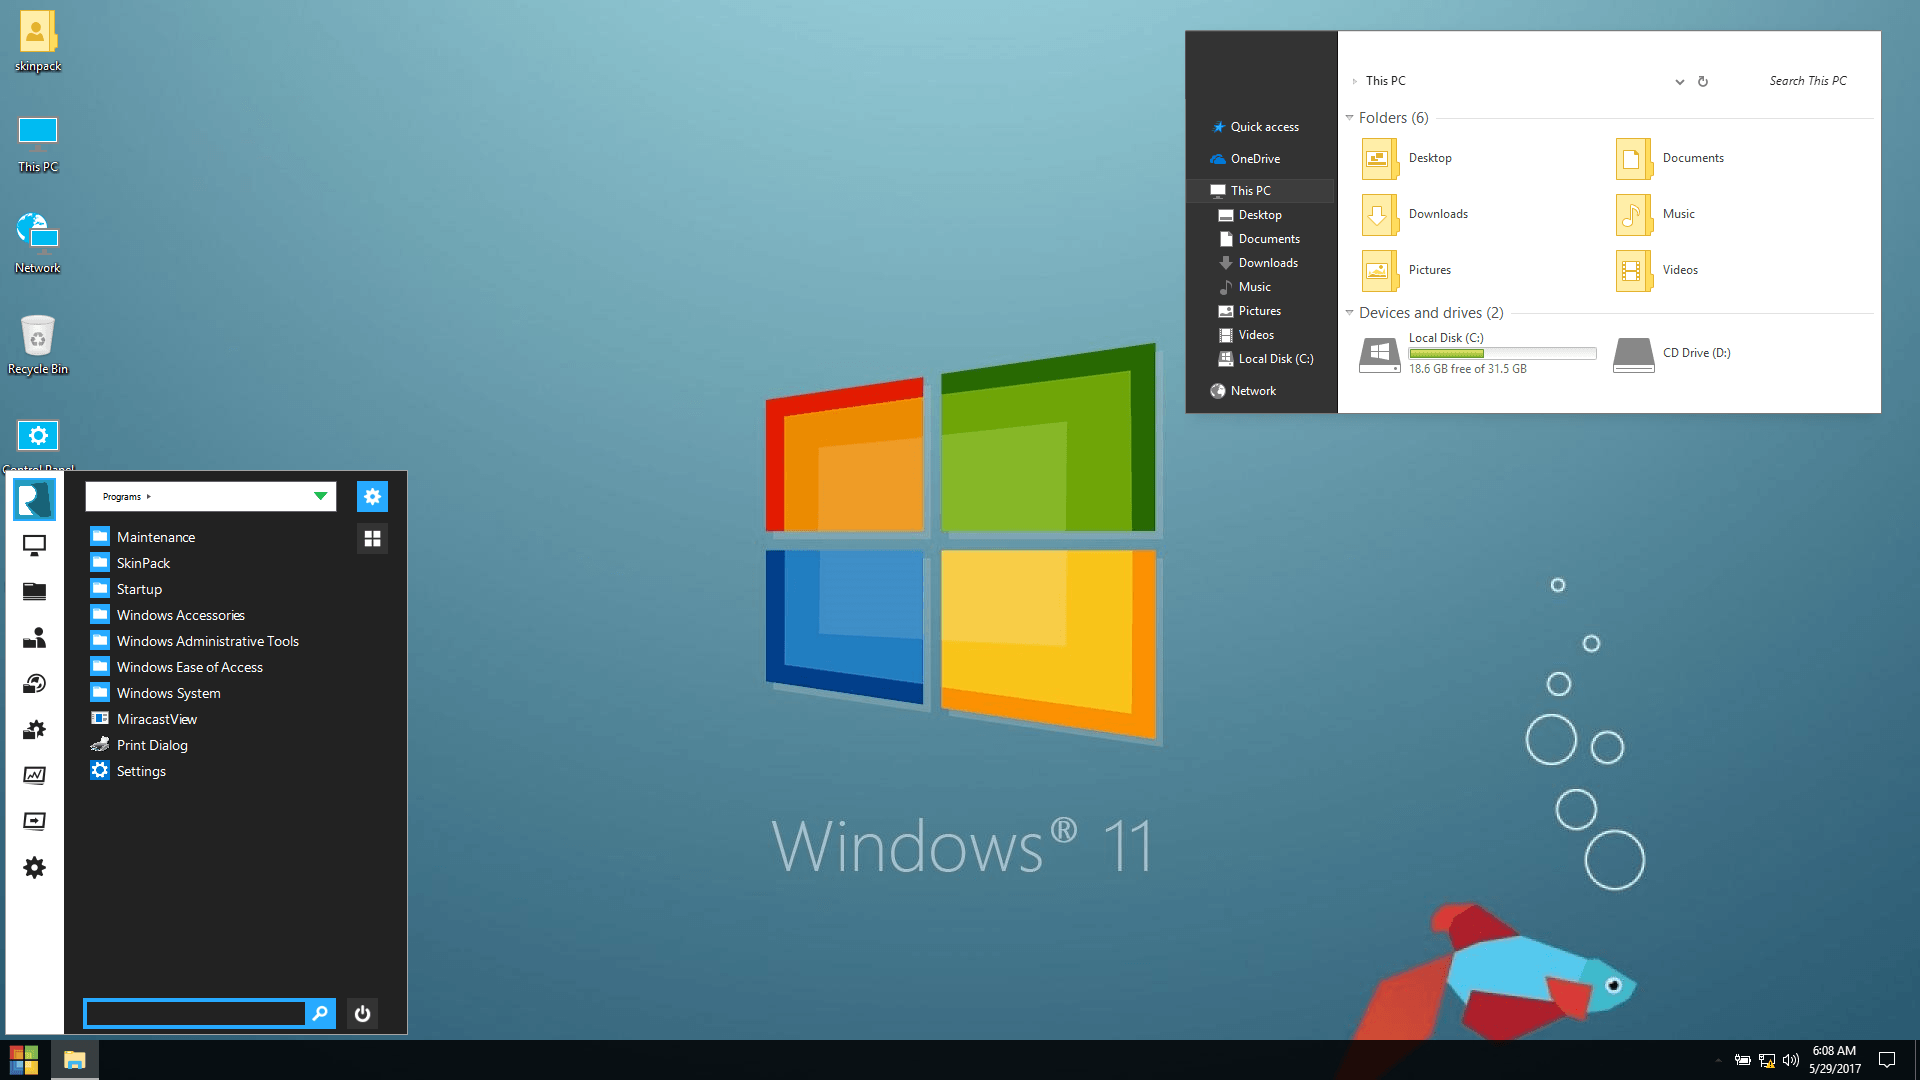 Windows 11 concept